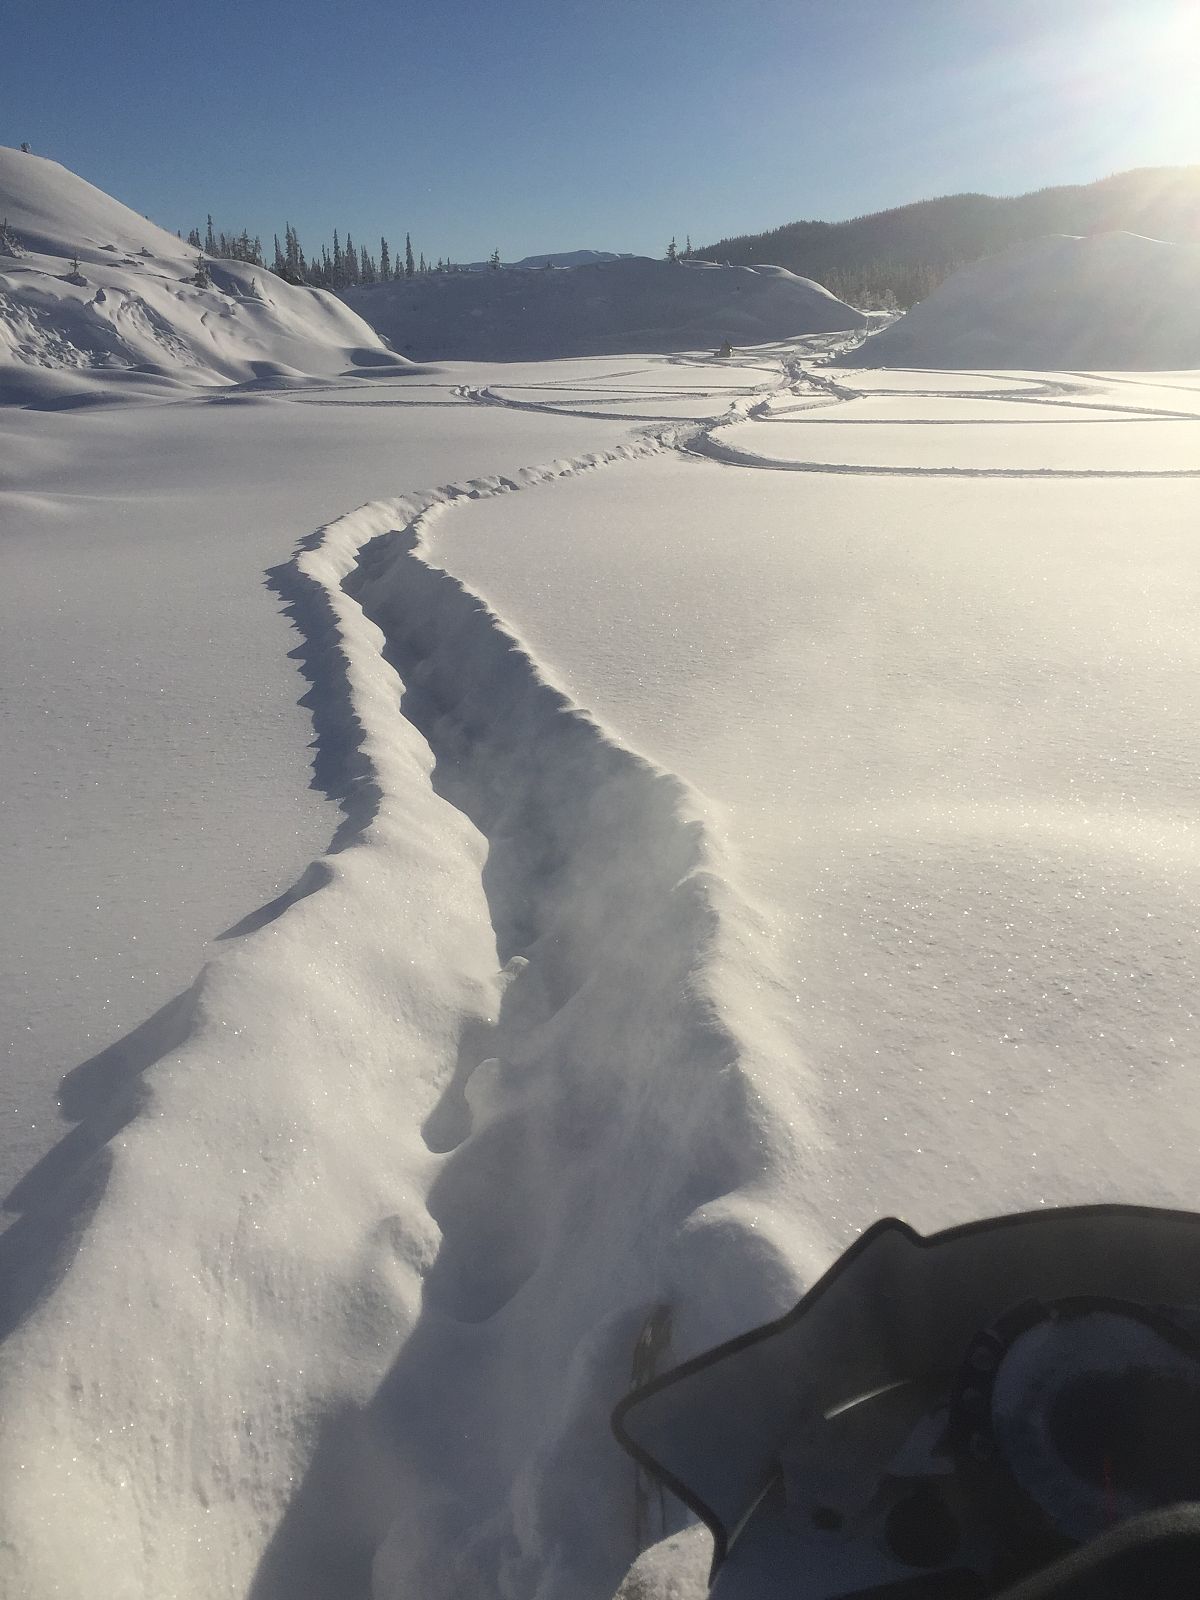 Moose tracks through the deep powder